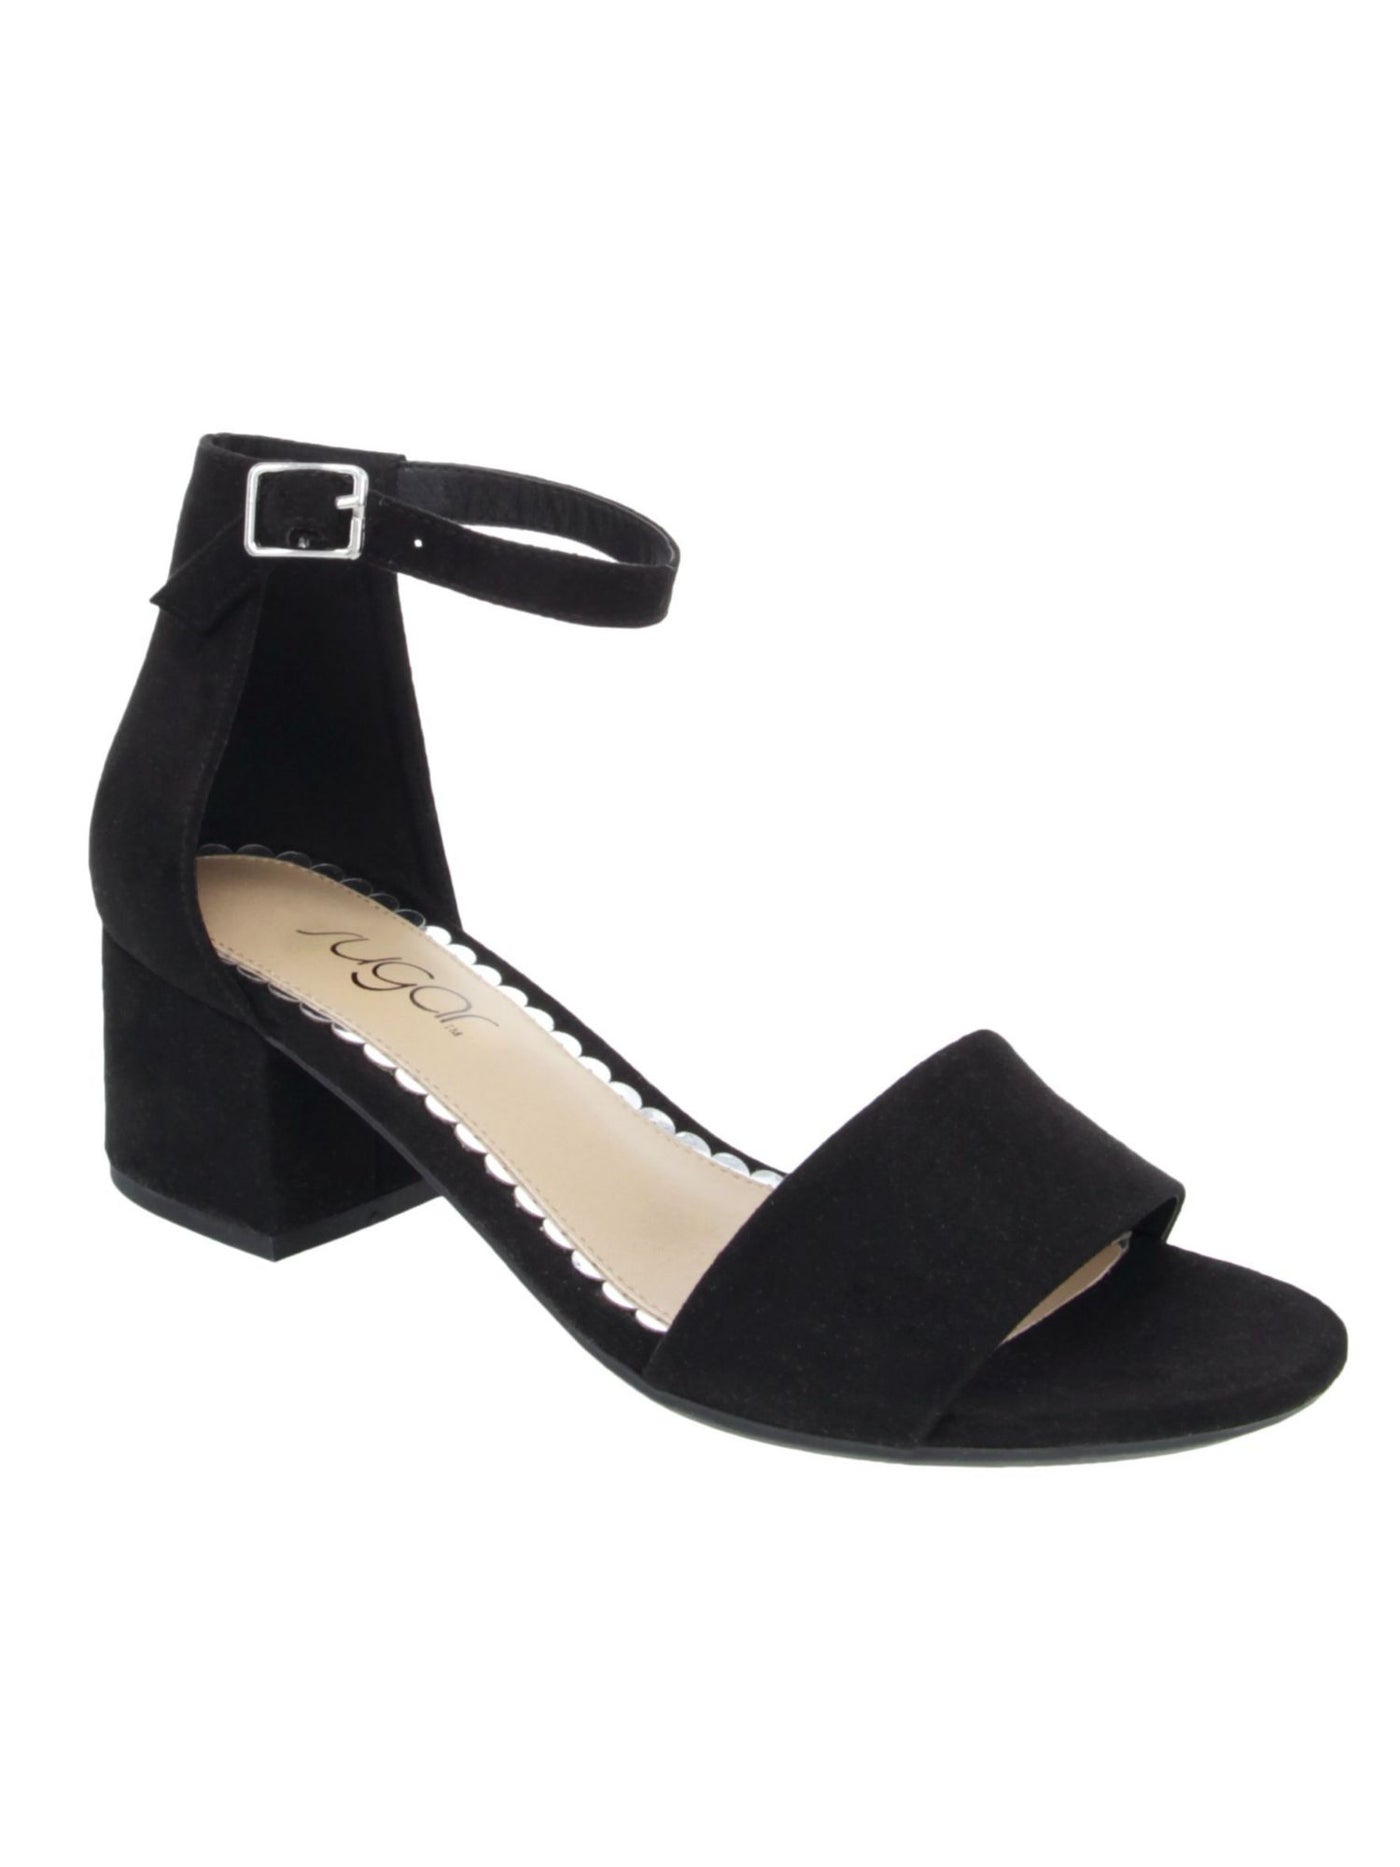 SUGAR Womens Black See-Through Strap Padded Comfort Noelle Round Toe Block Heel Buckle Dress Sandals 8 M